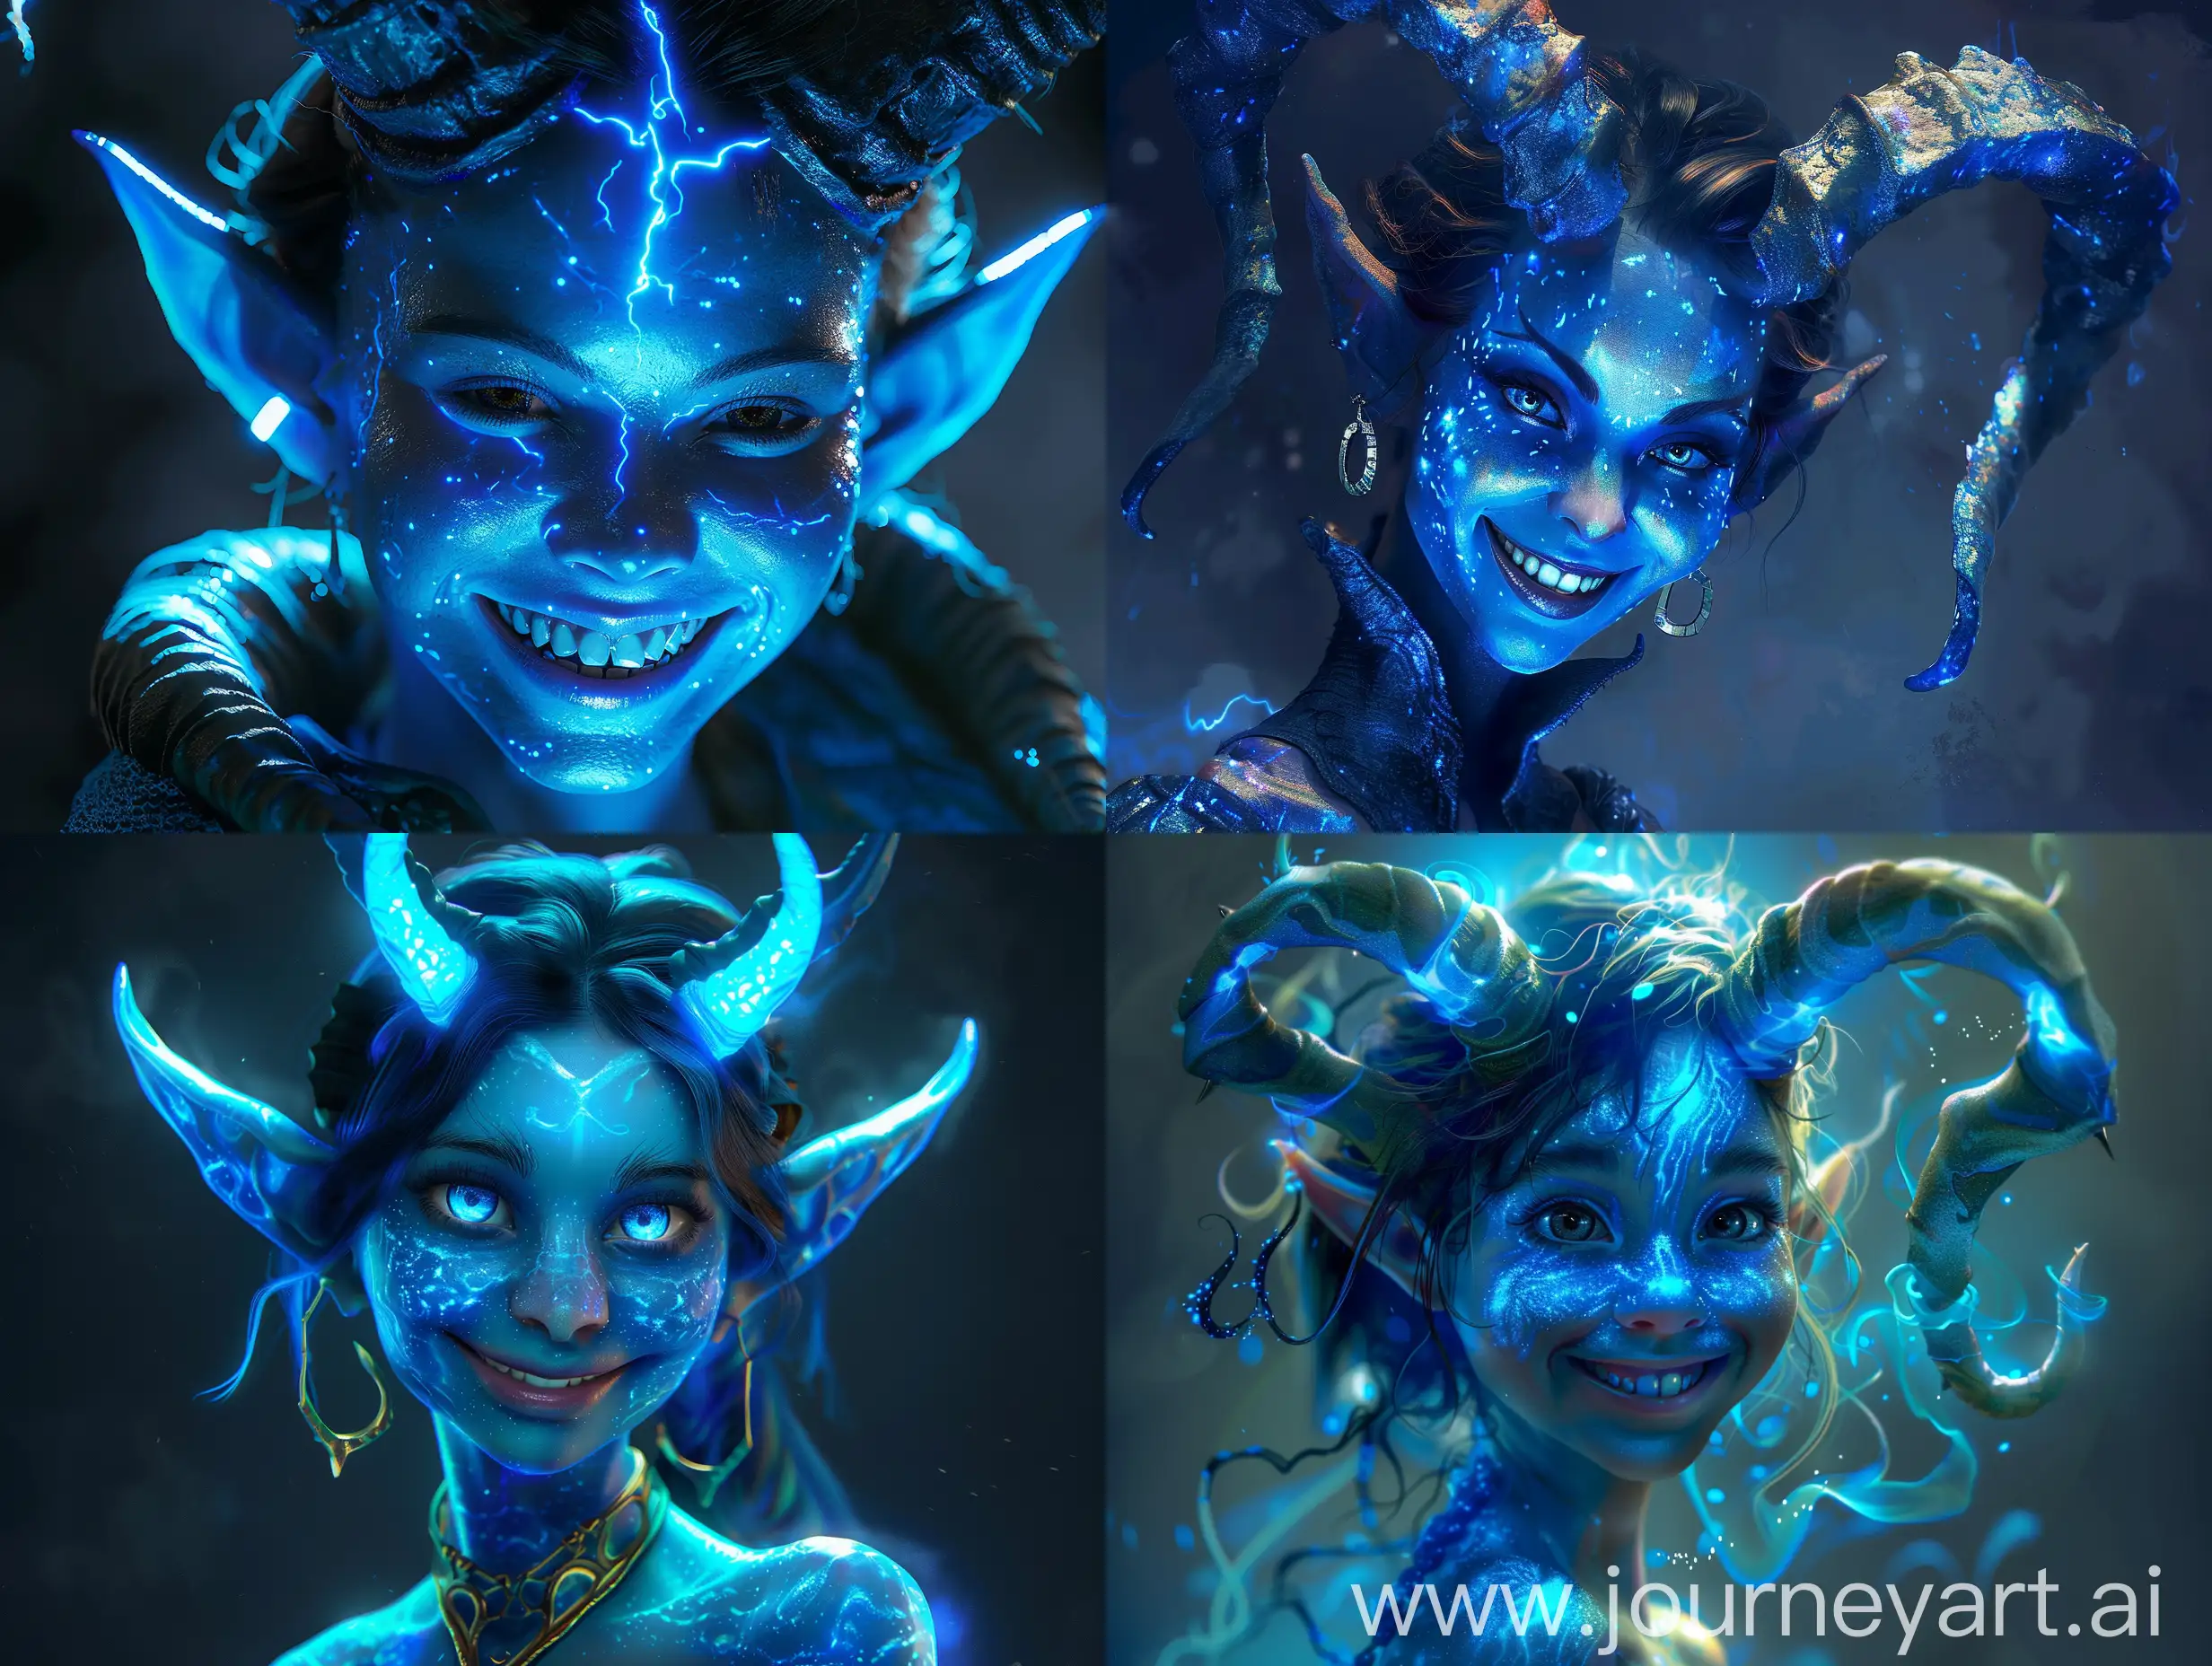 Enchanting-Smiling-Female-Djinn-with-Glowing-Blue-Skin-and-Horns-Fantasy-Magic-Portrait